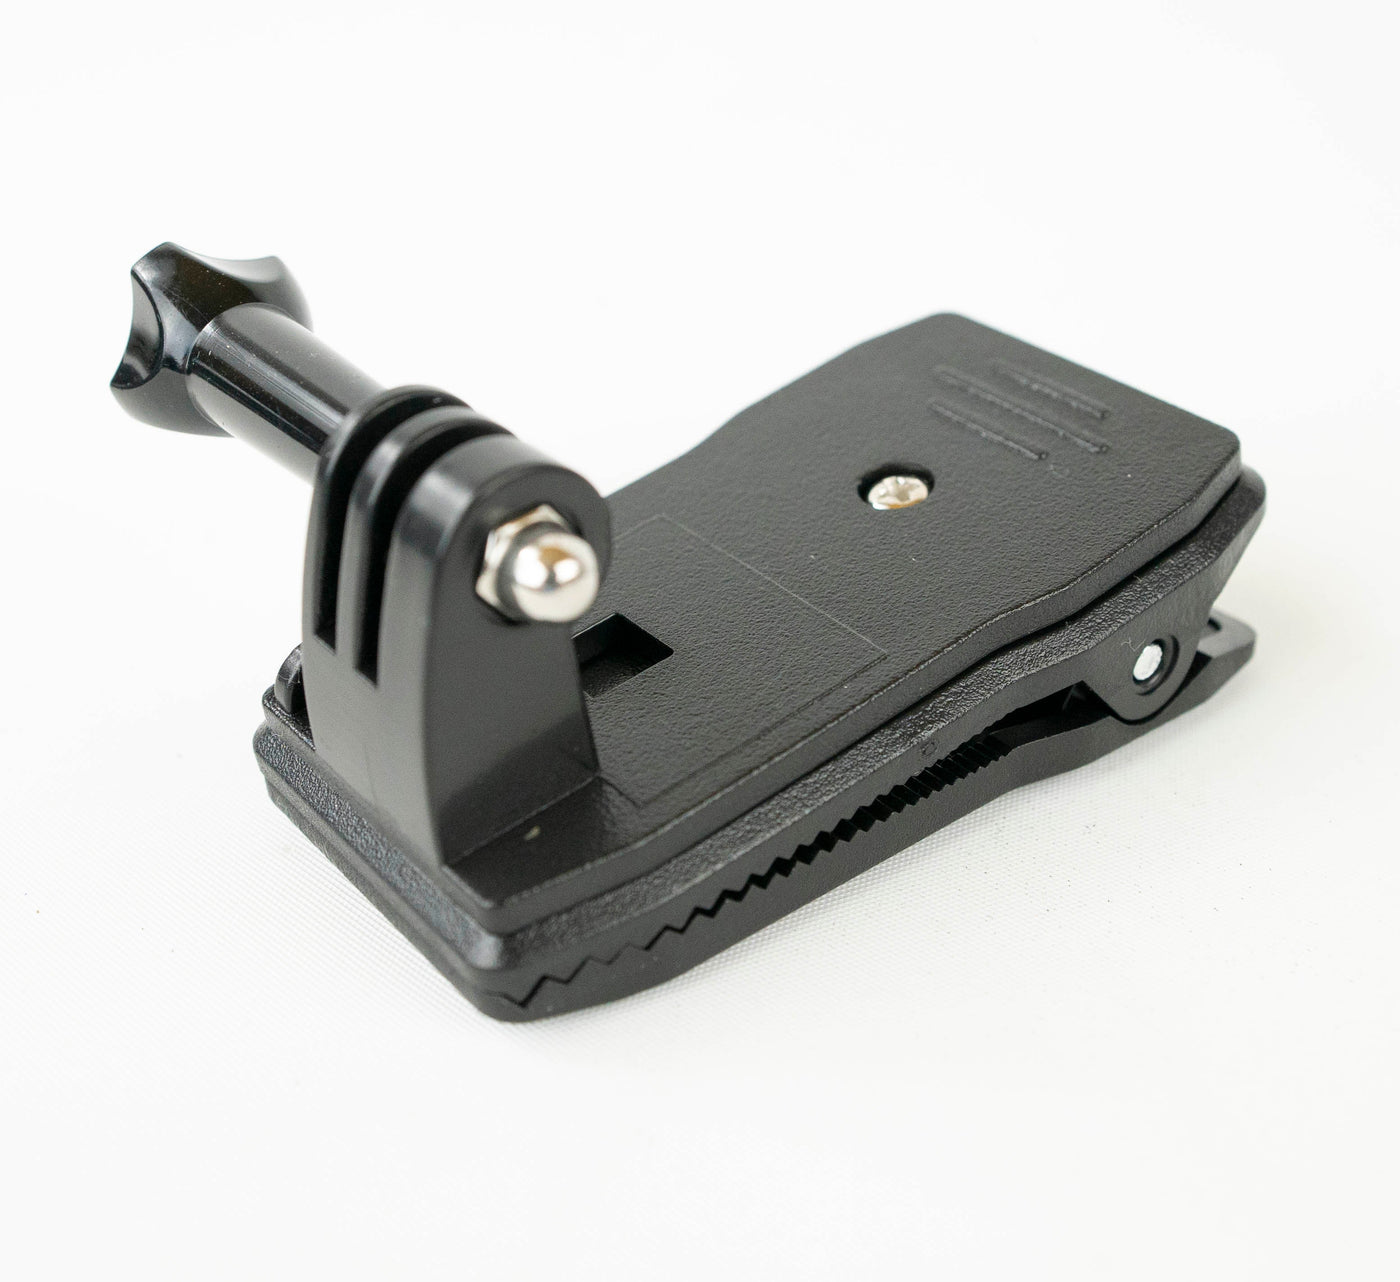 Attachment Kit - Basic - Small Cams - EU